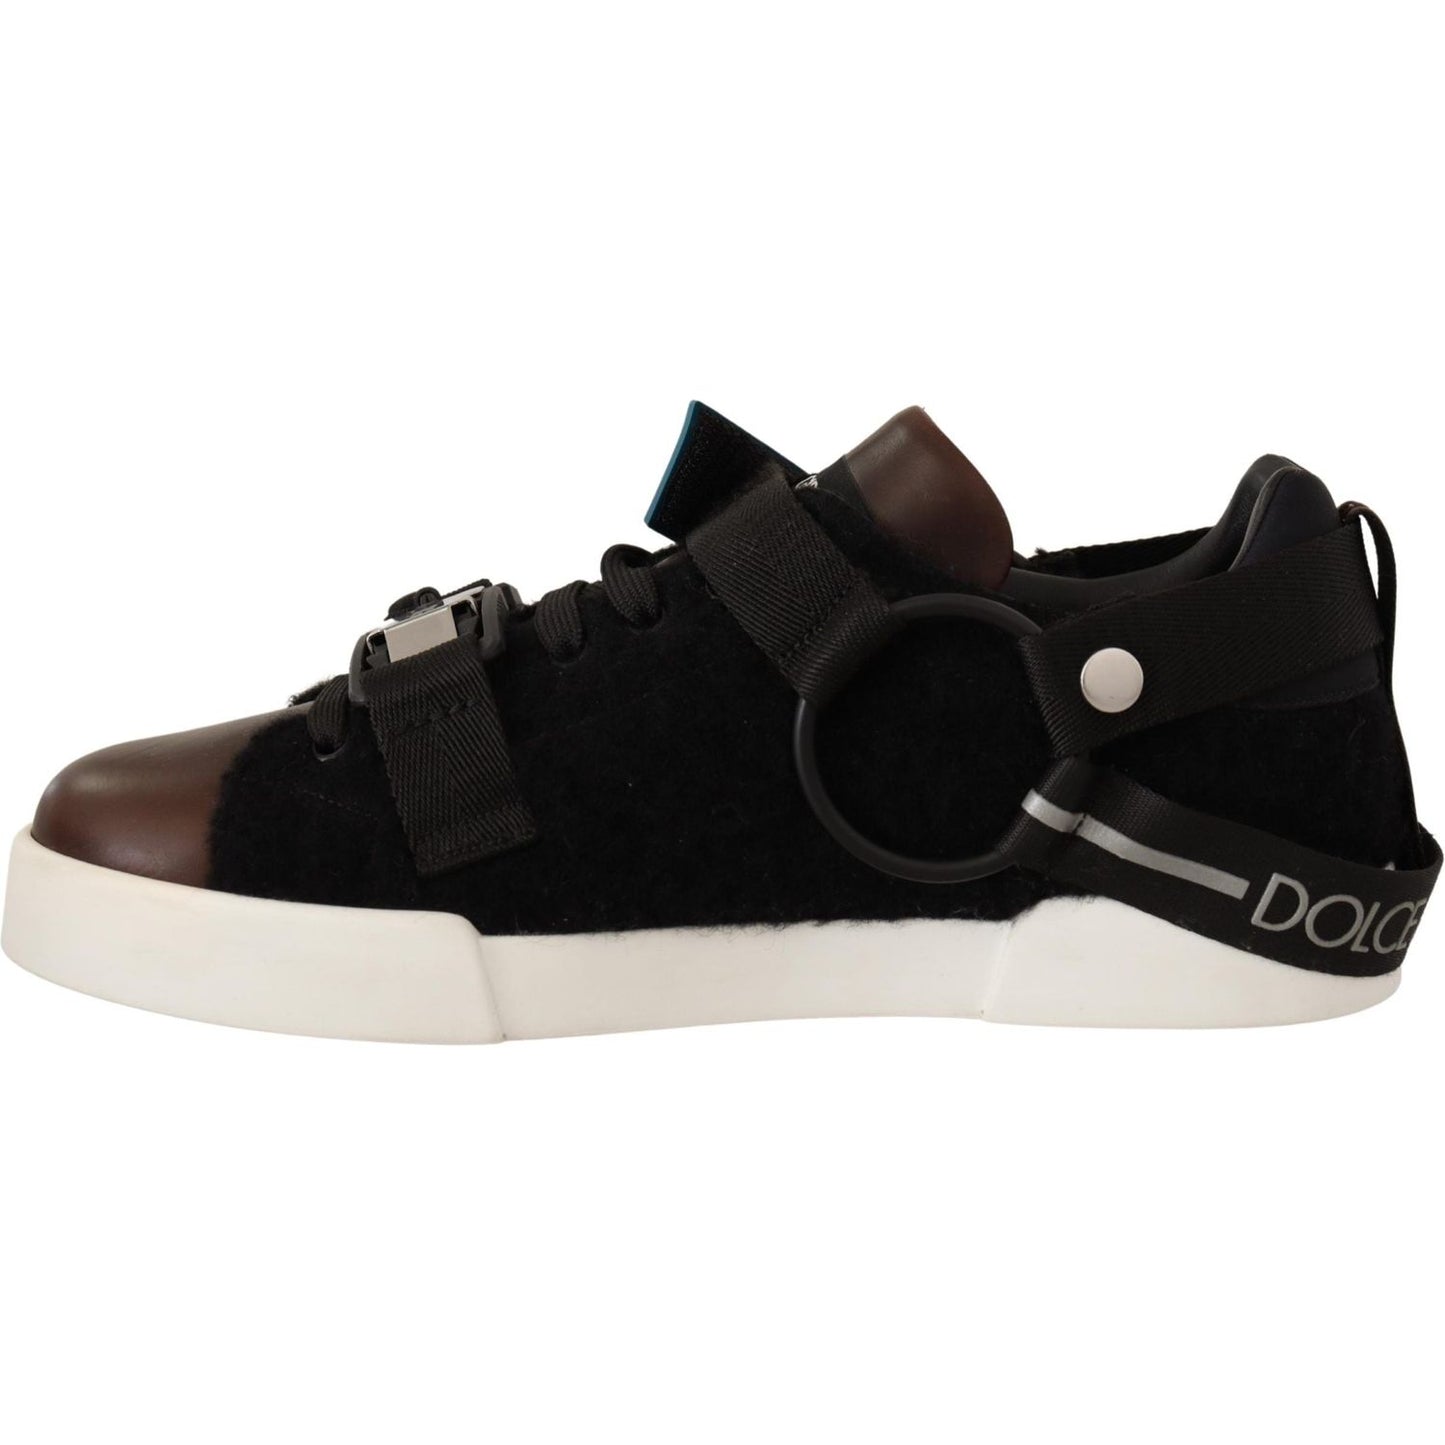 Dolce & Gabbana Shearling-Trimmed Leather Sneakers brown-leather-black-shearling-sneakers IMG_9278-scaled-c04e5f6b-ca4.jpg